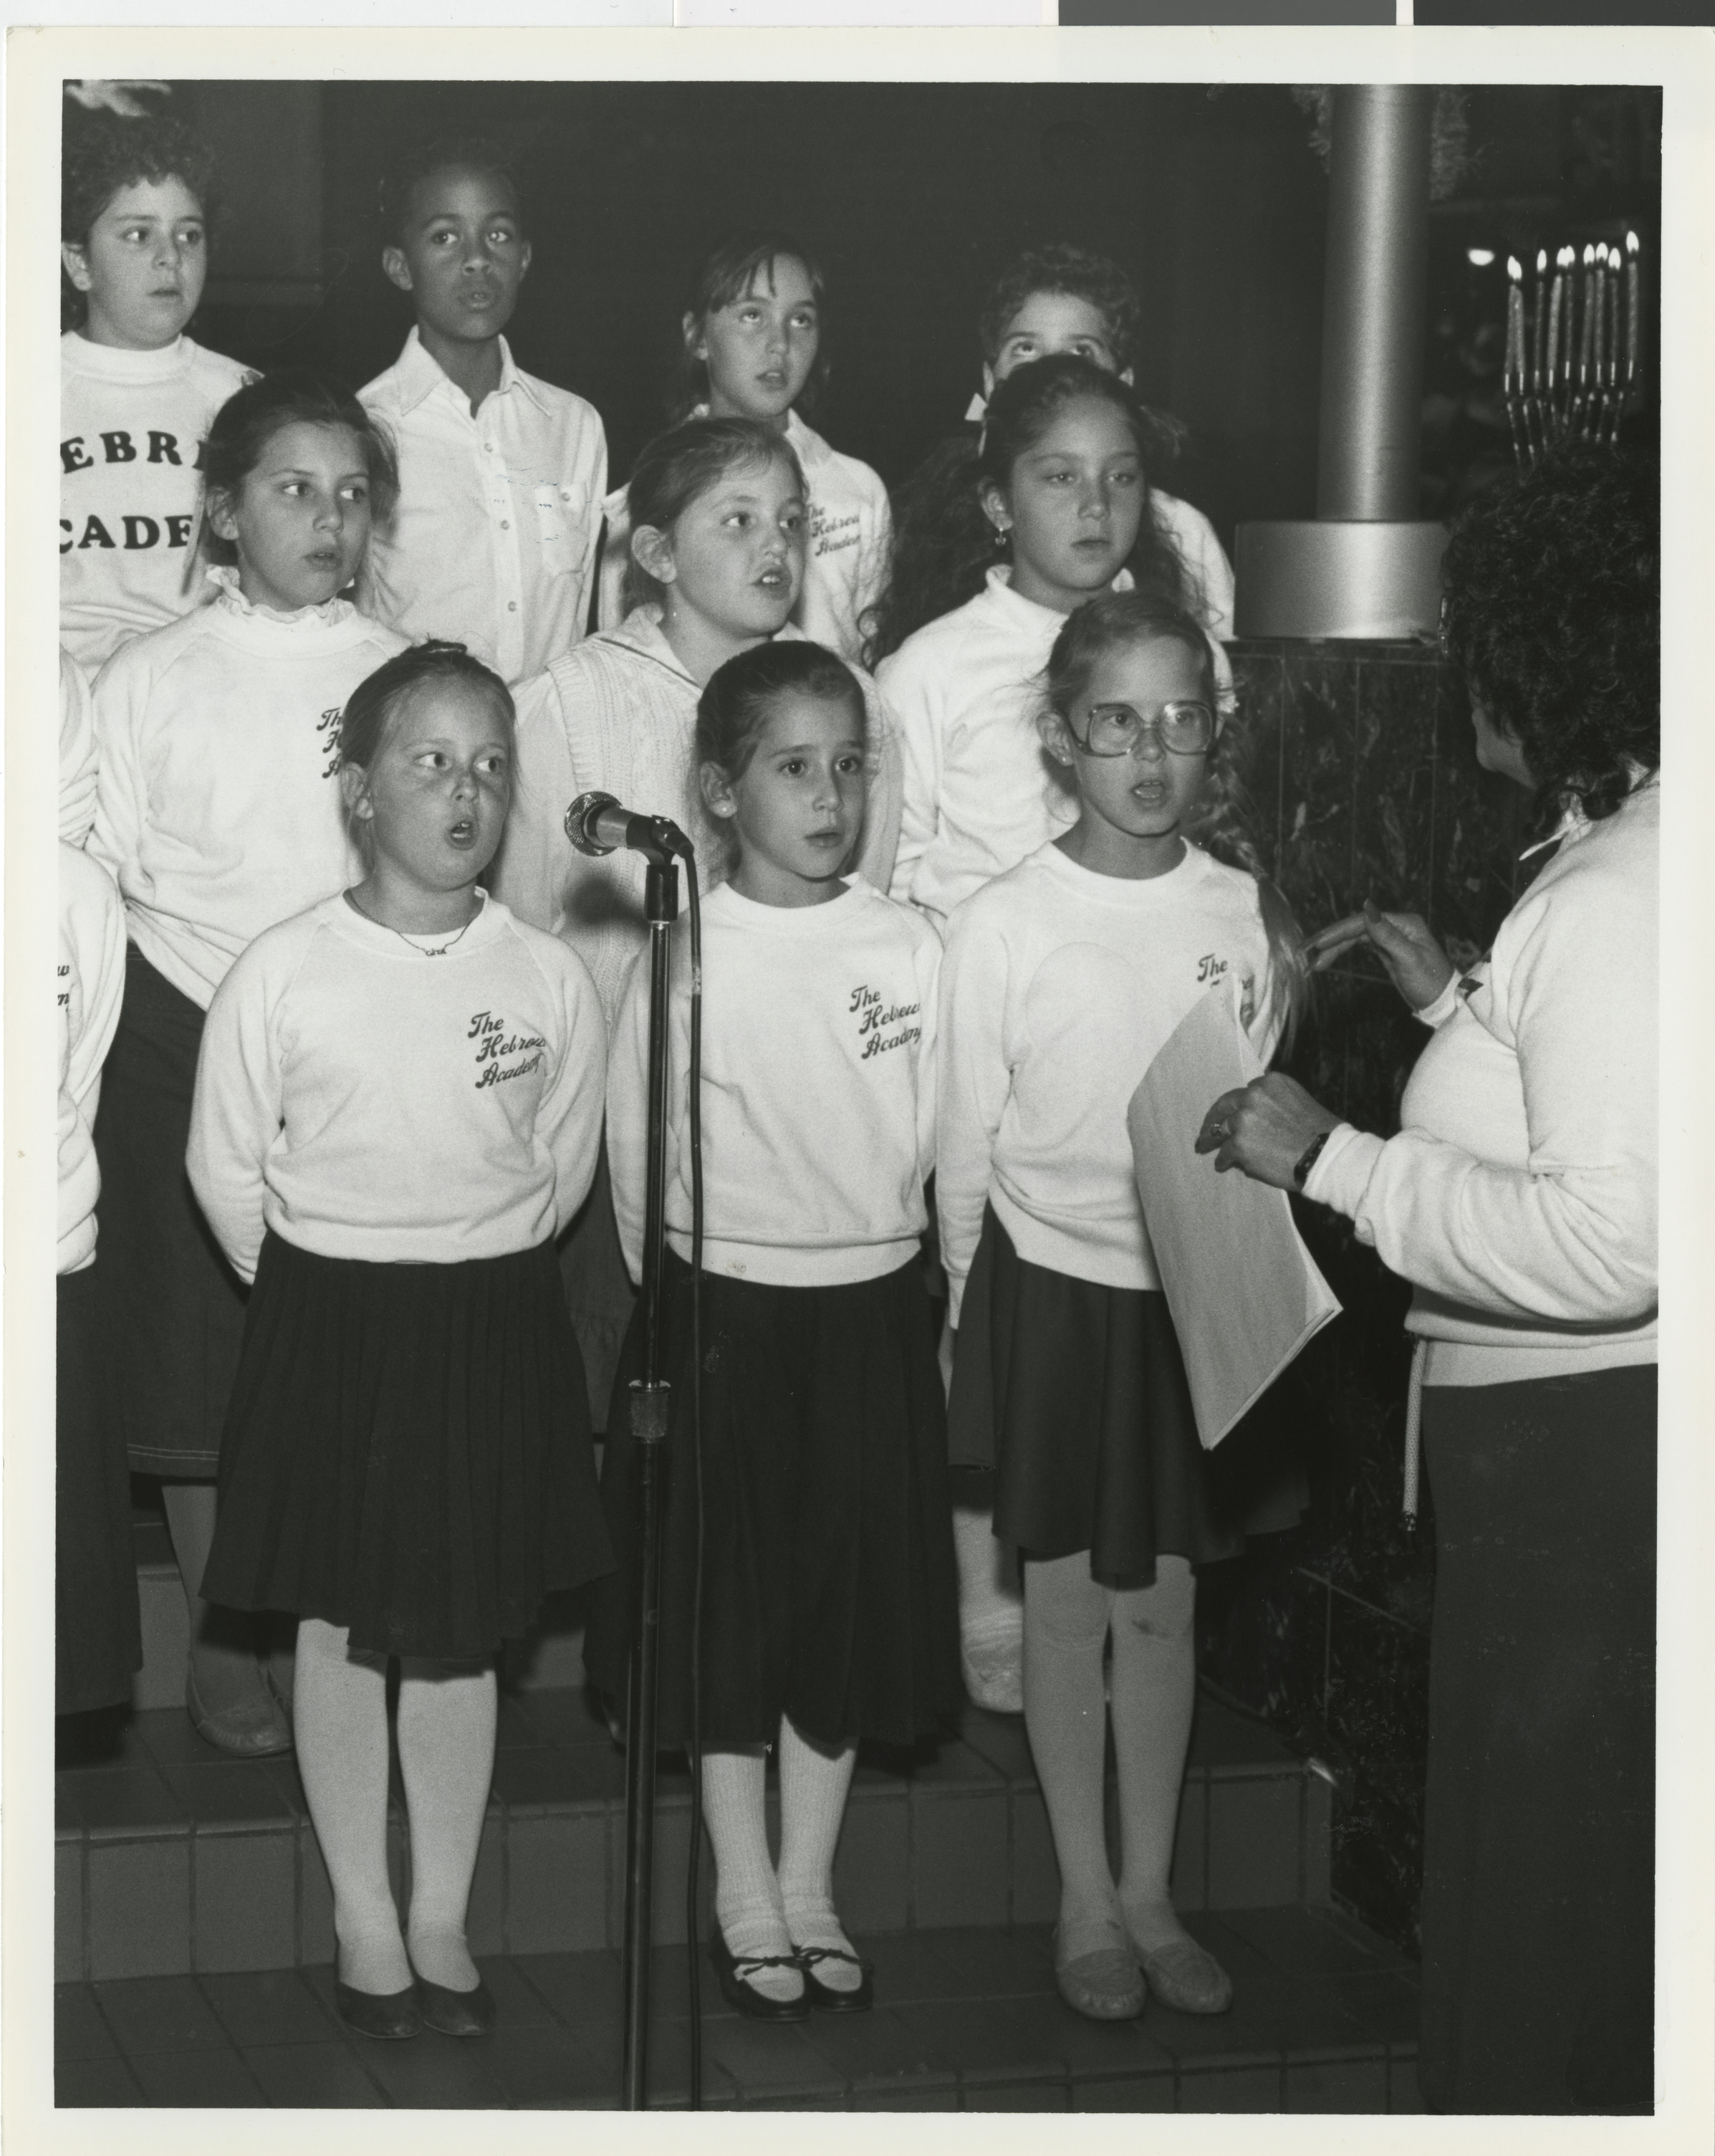 Photograph of Hebrew Academy children singing, 1980s